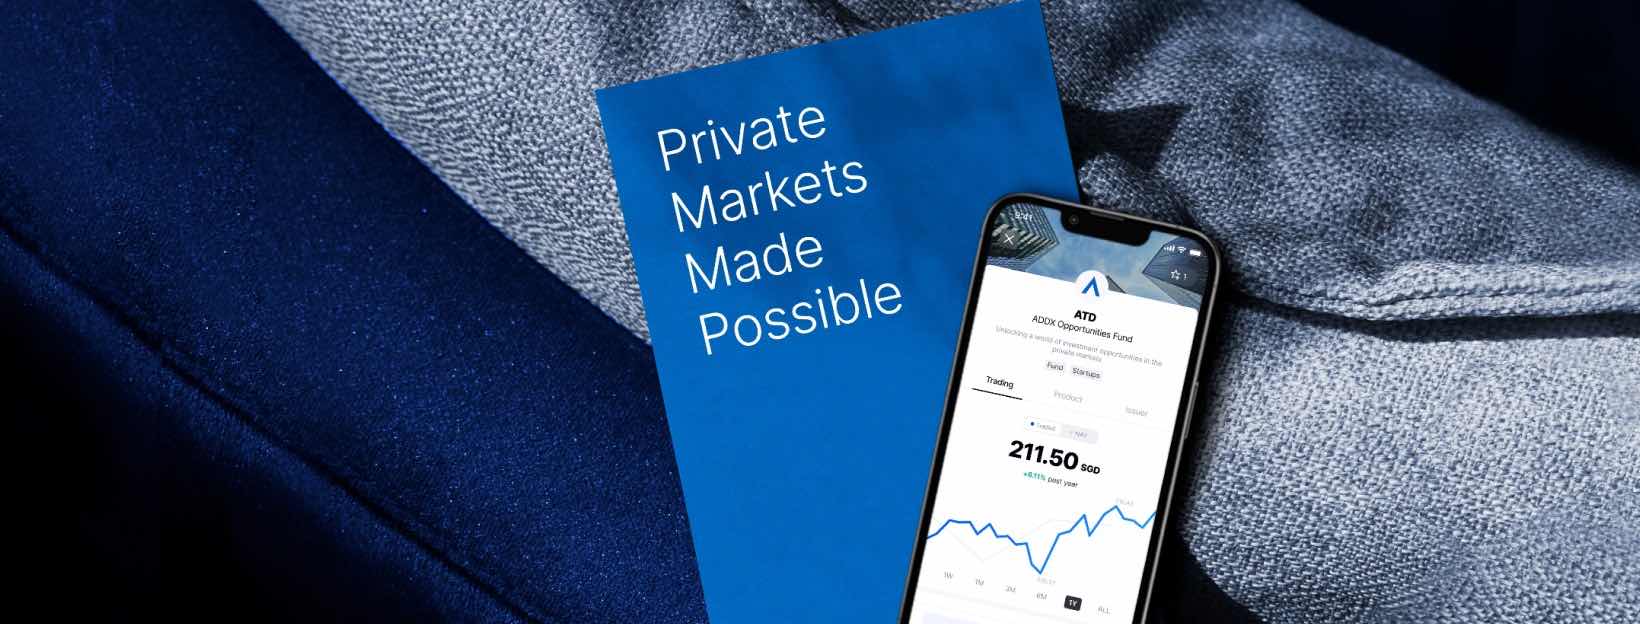 ADDX private markets.jpg